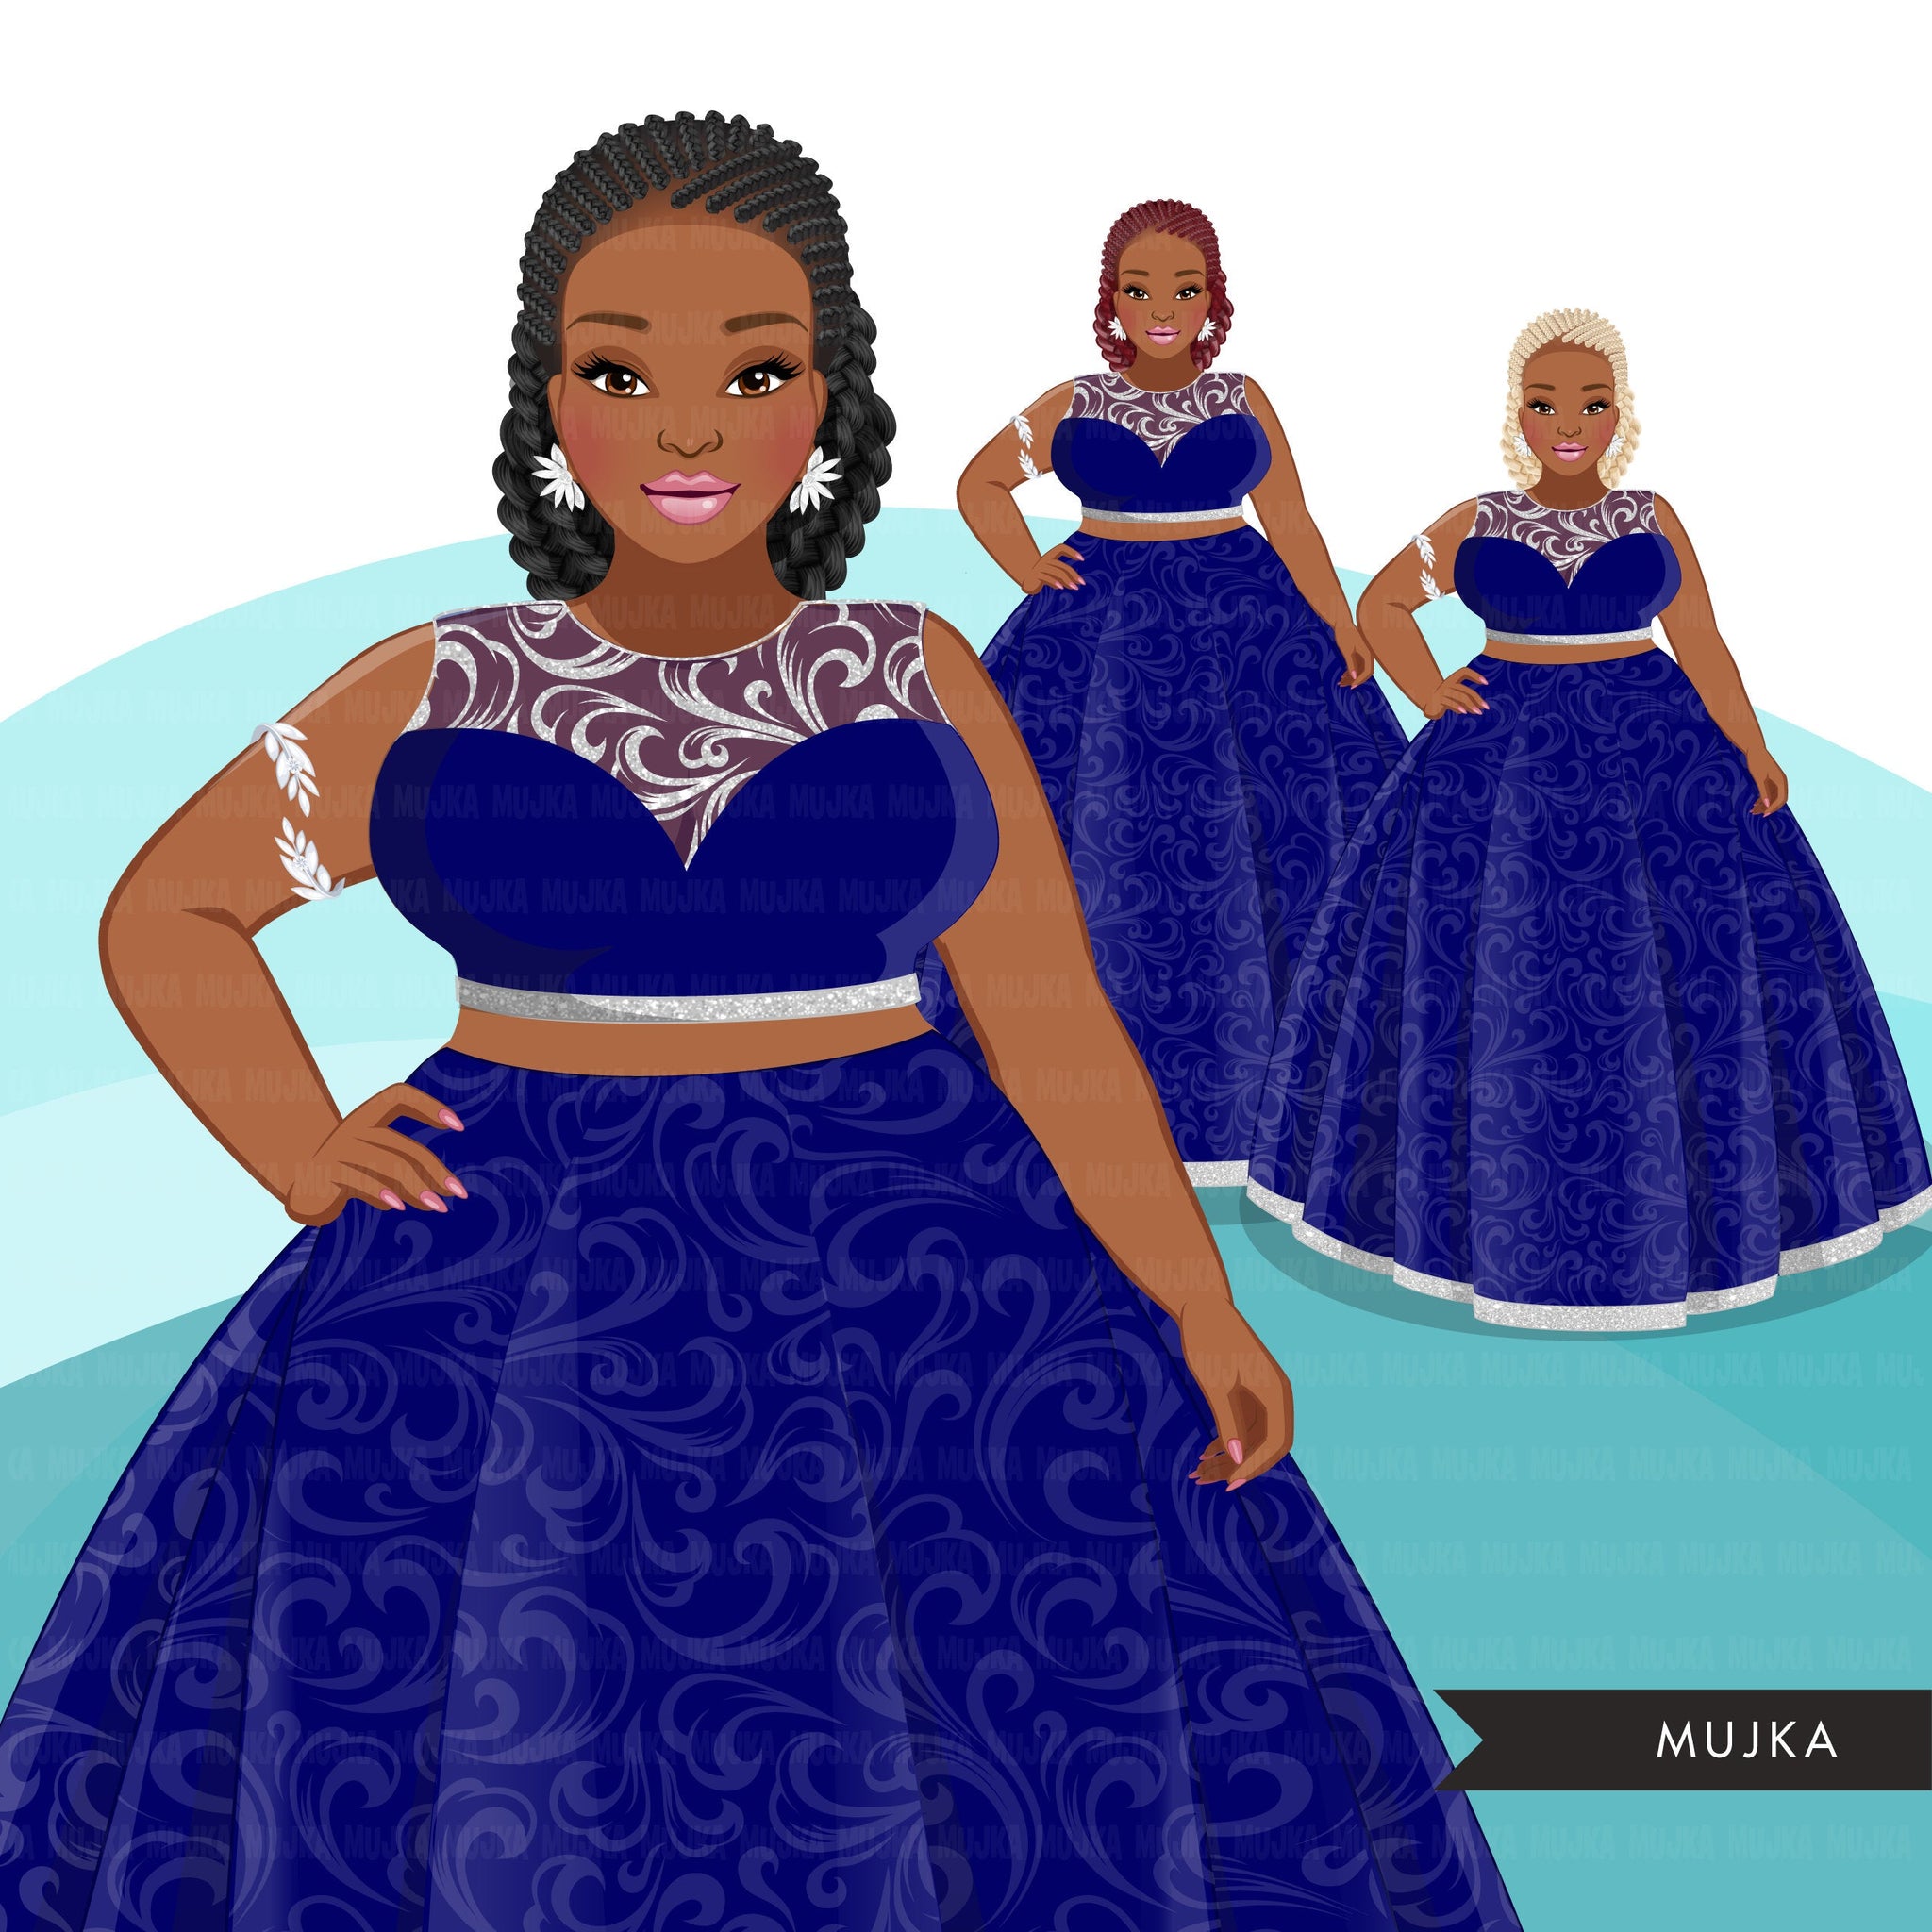 Fashion Clipart, blue dress, black woman braids, sisters, curvy friends, sisterhood Sublimation designs digital download for Cricut